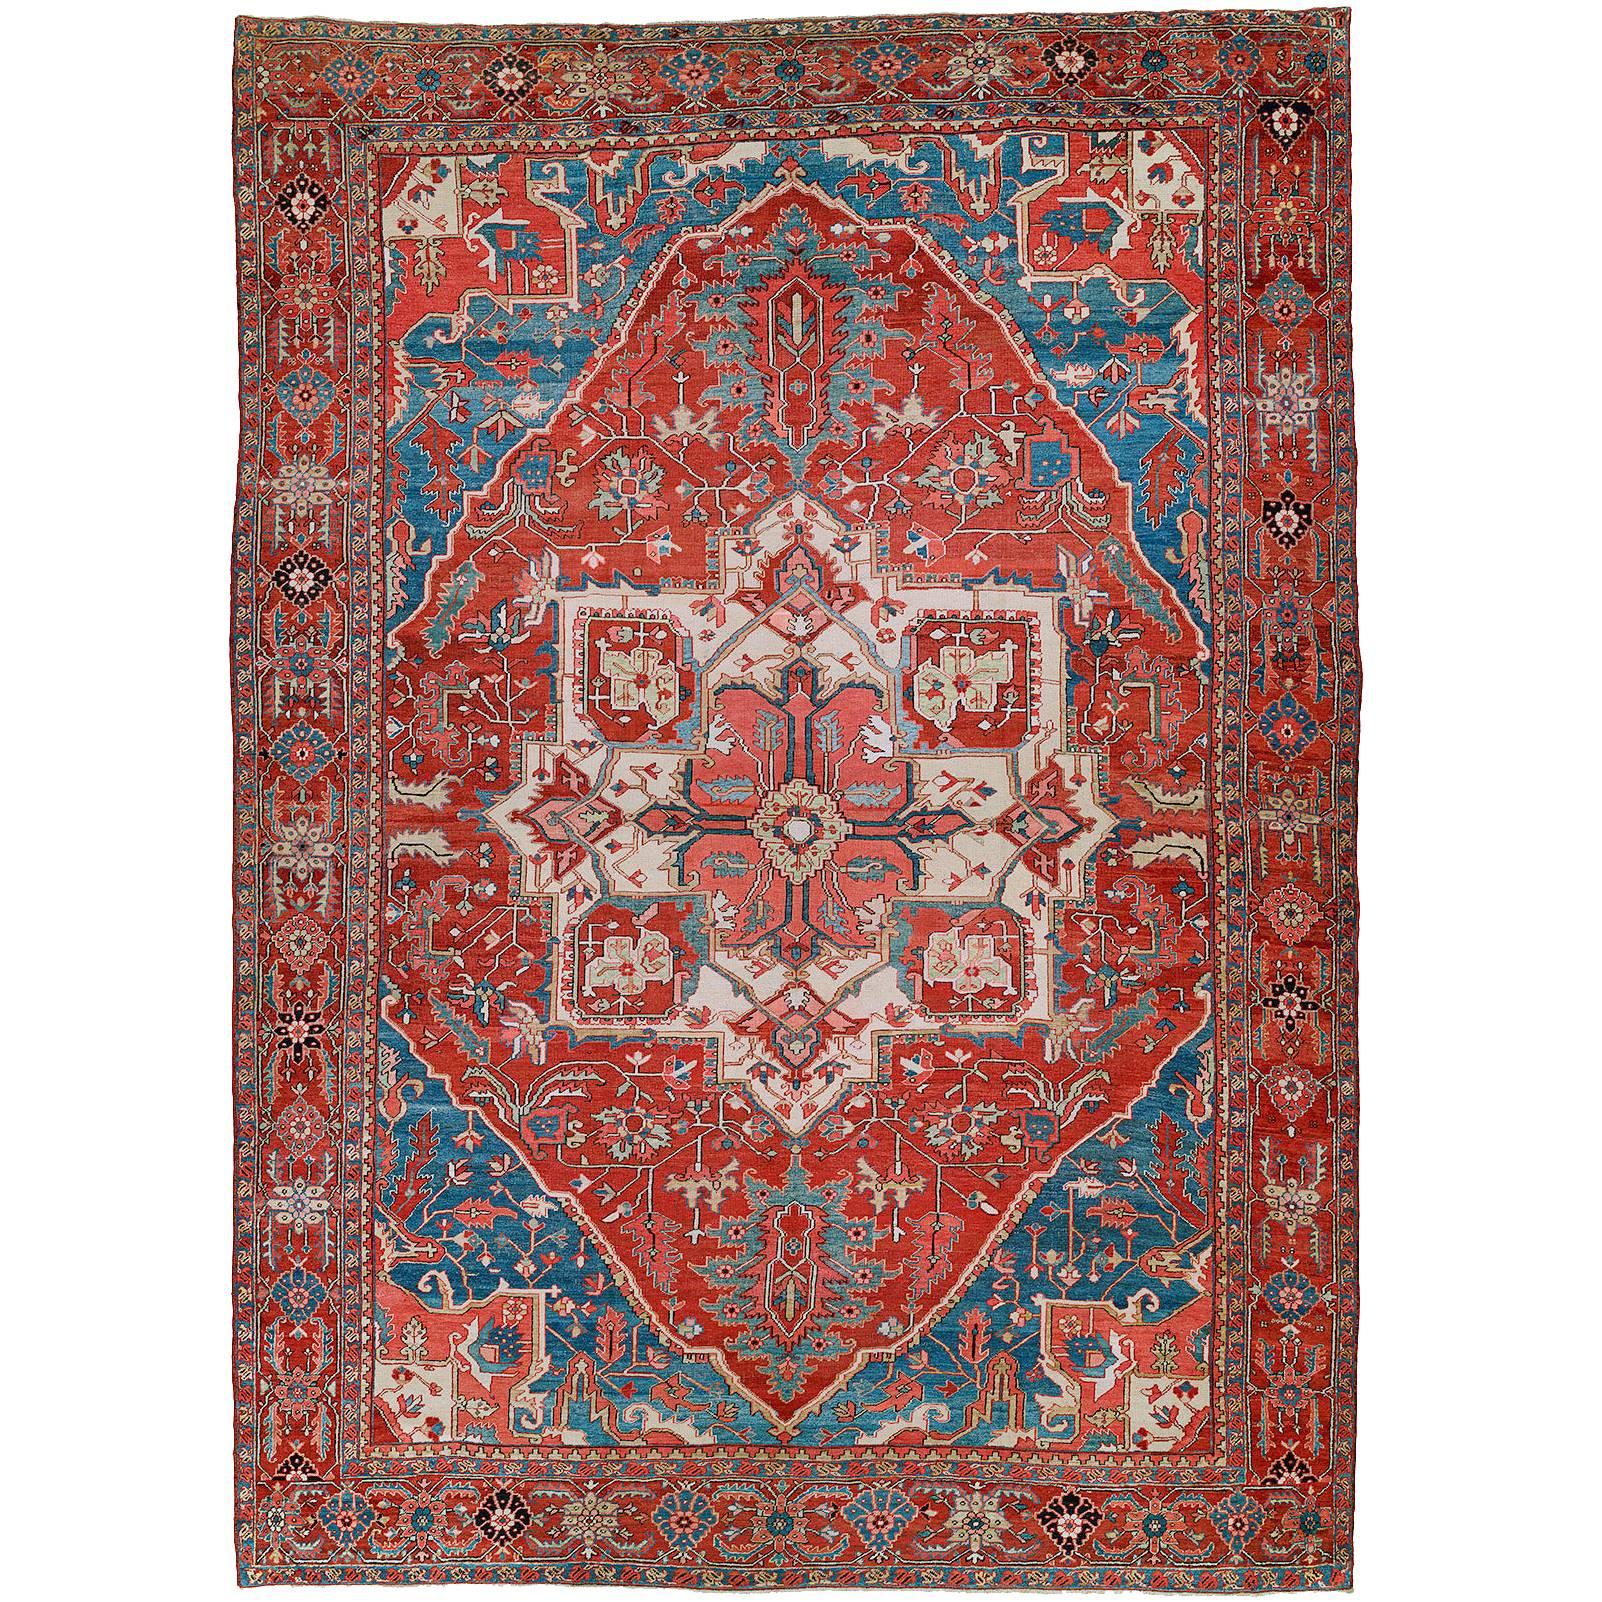 Oversize Antique Persian Heriz Carpet